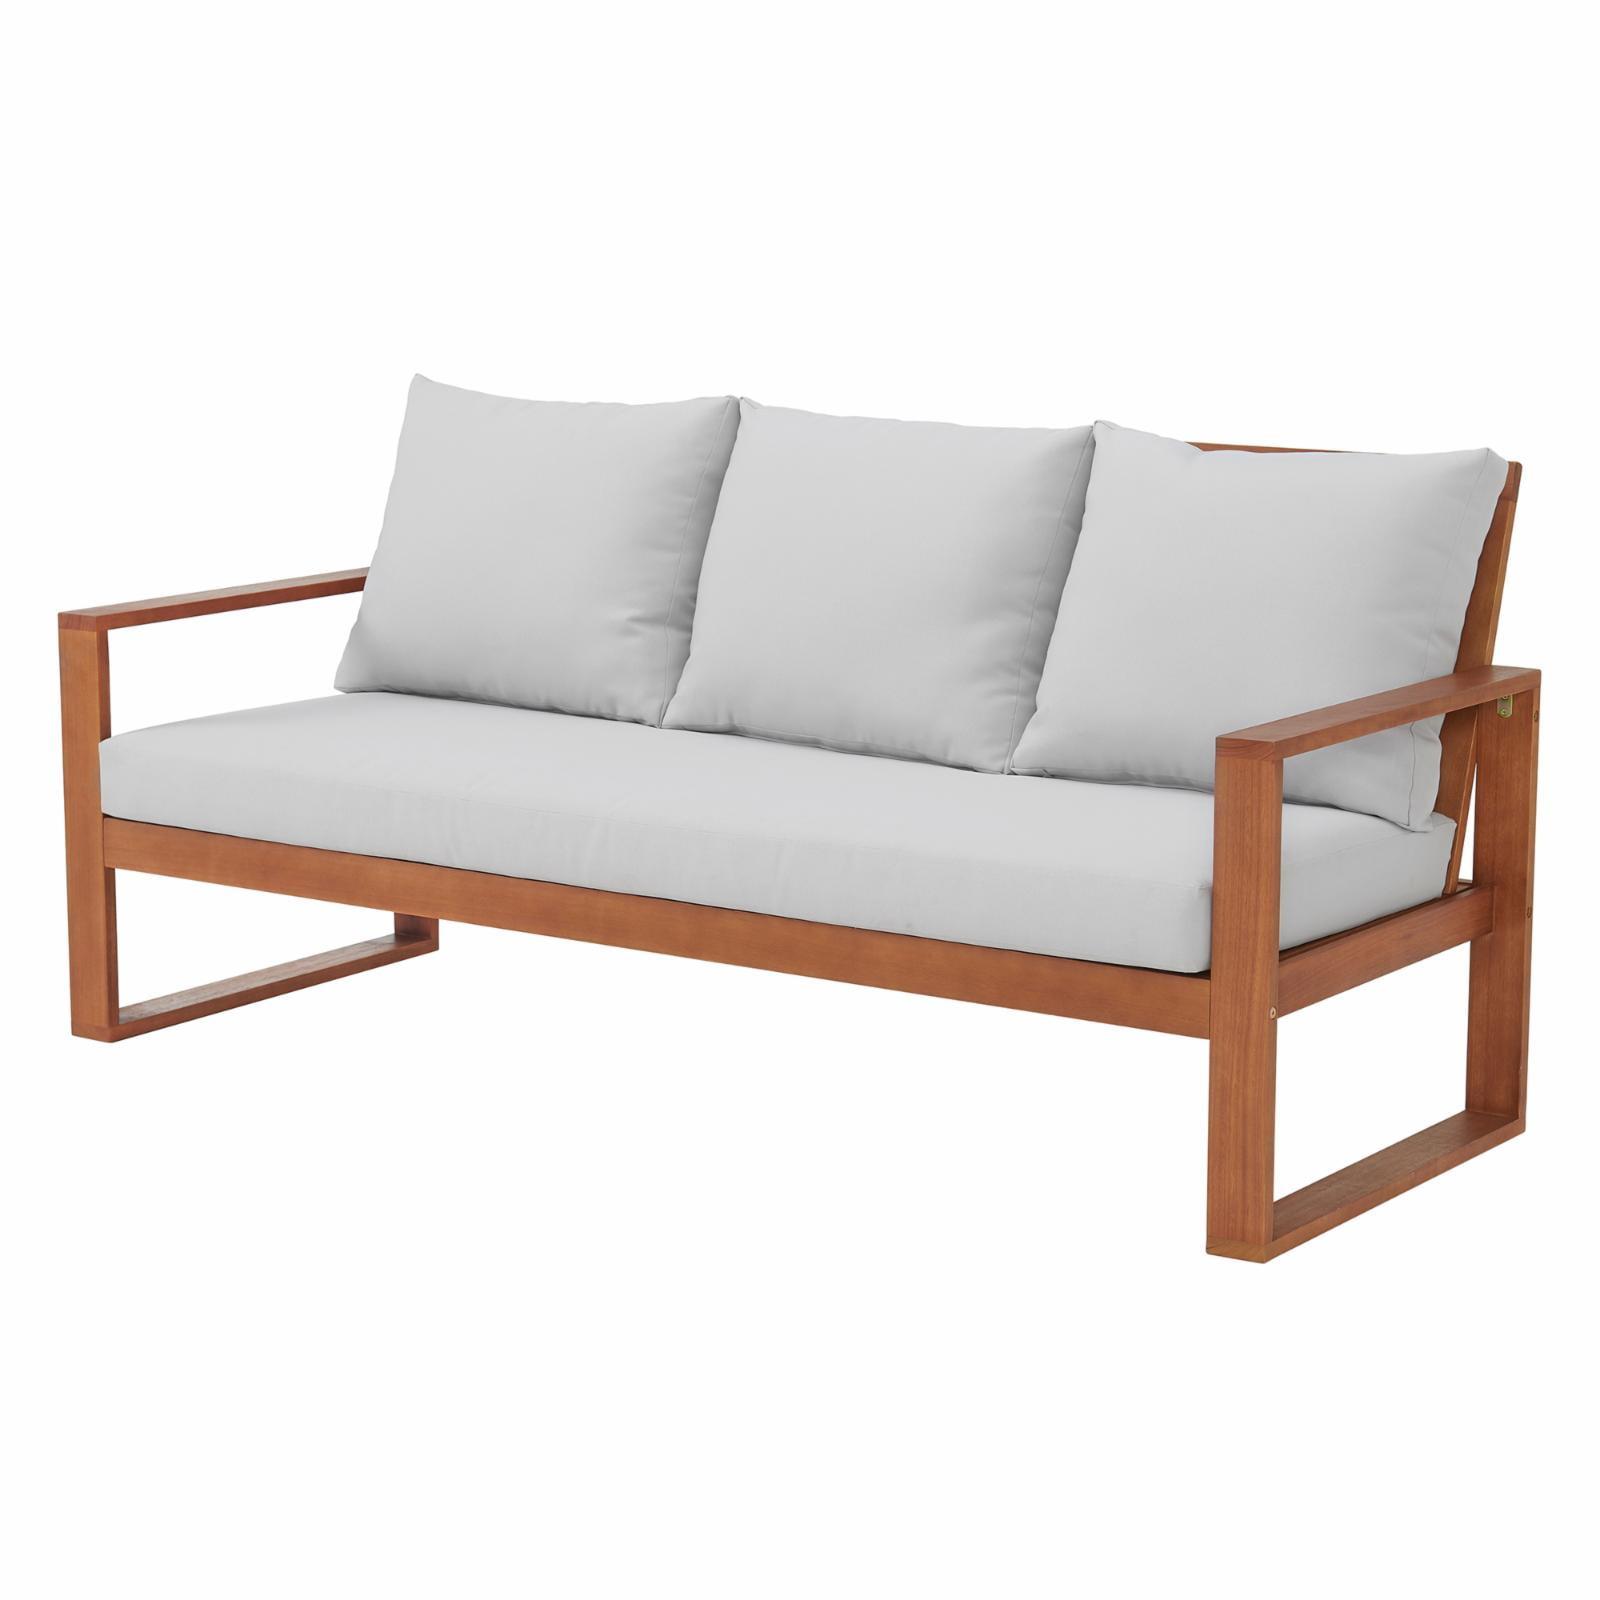 Grafton Luxe Eucalyptus 3-Seater Outdoor Bench with Gray Cushions